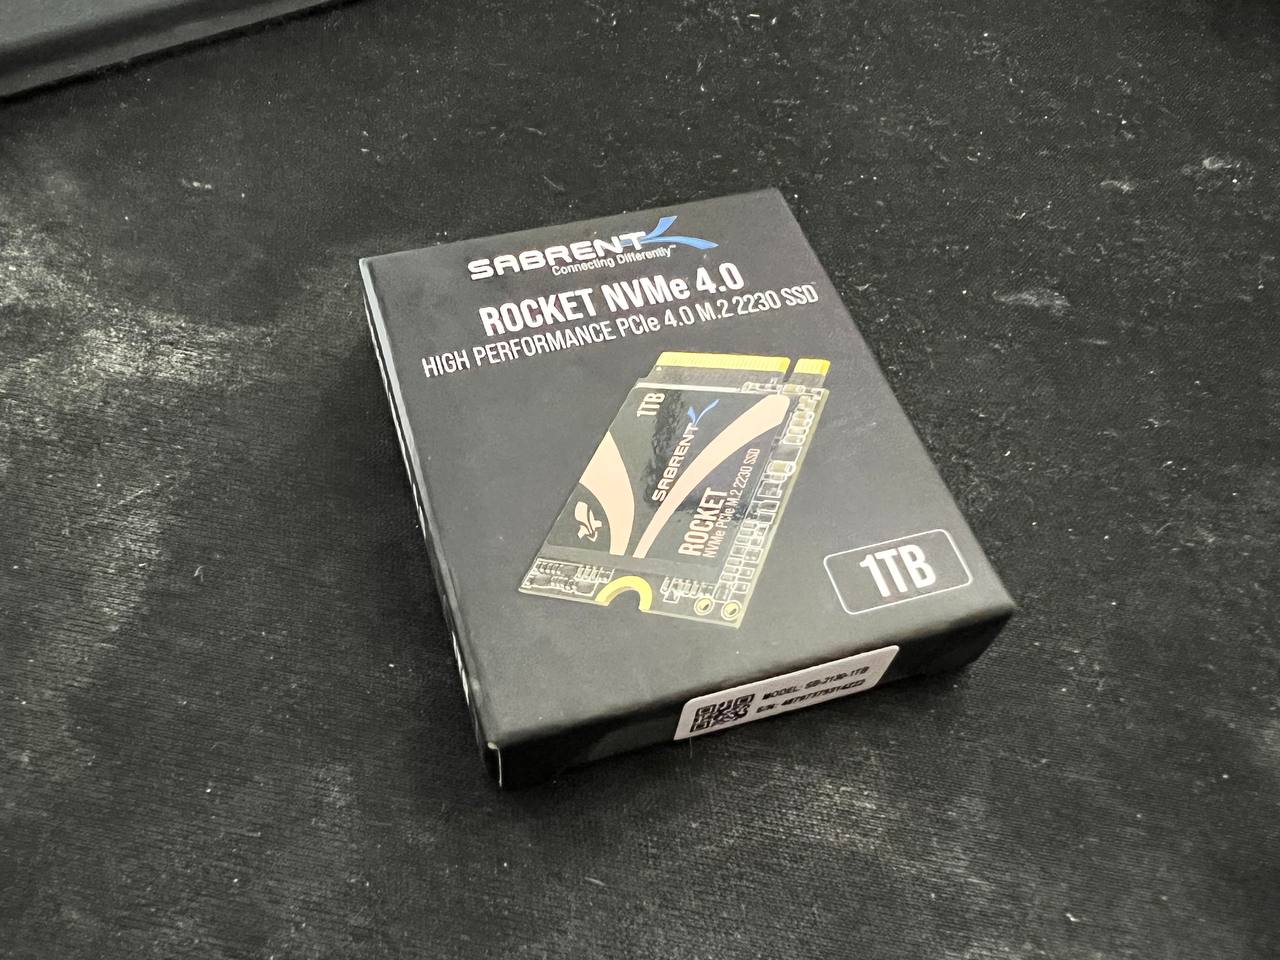  SABRENT Rocket 2230 NVMe 4.0 1TB High Performance PCIe